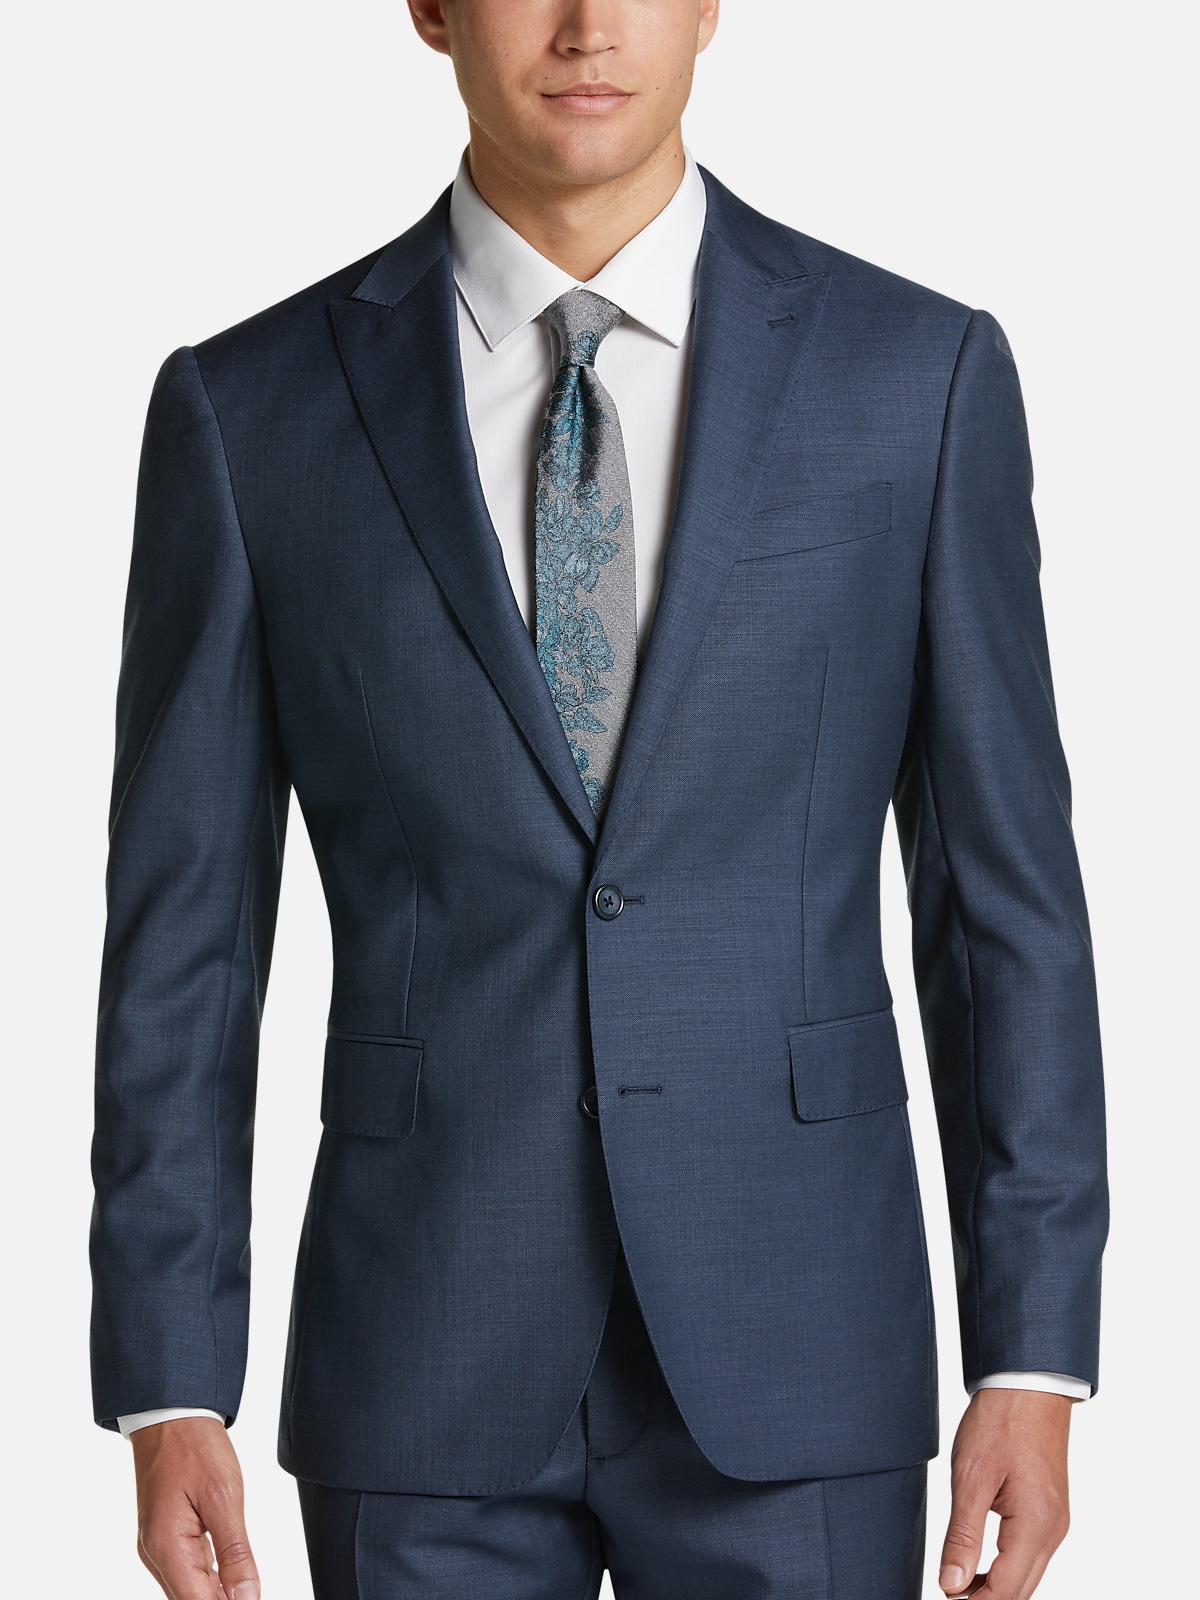 JOE Joseph Abboud Slim Fit Suit | All Sale| Men's Wearhouse